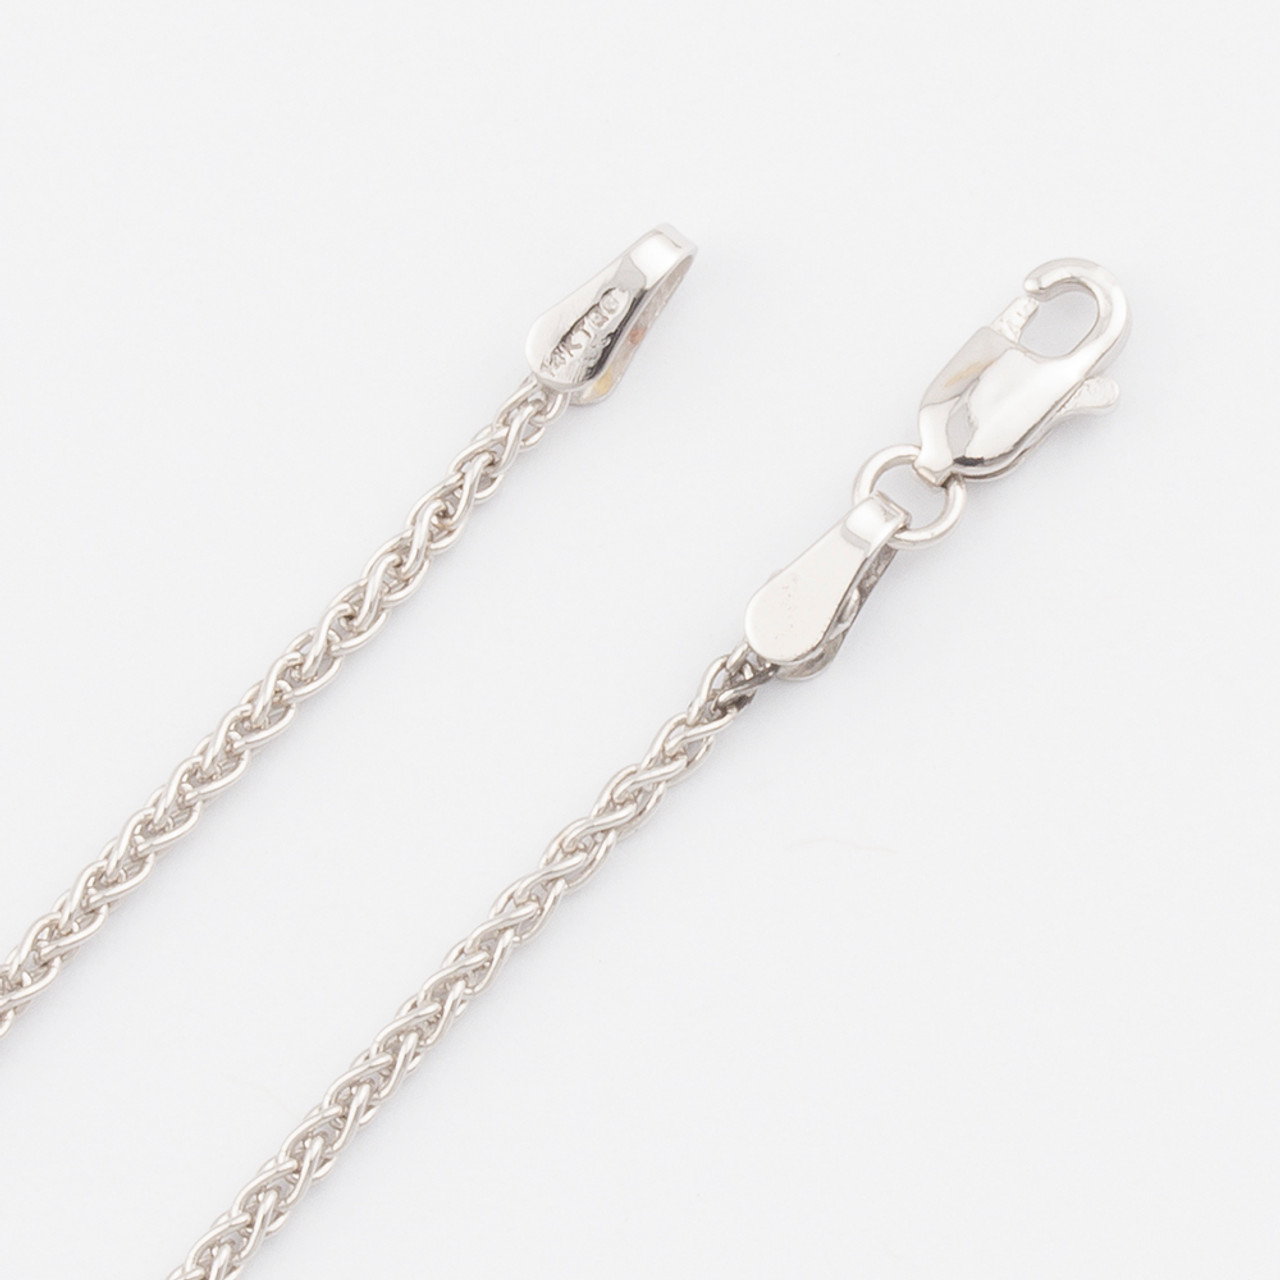 Zales 1.0mm Diamond-Cut Spiga Chain Necklace in 18K Gold - 16